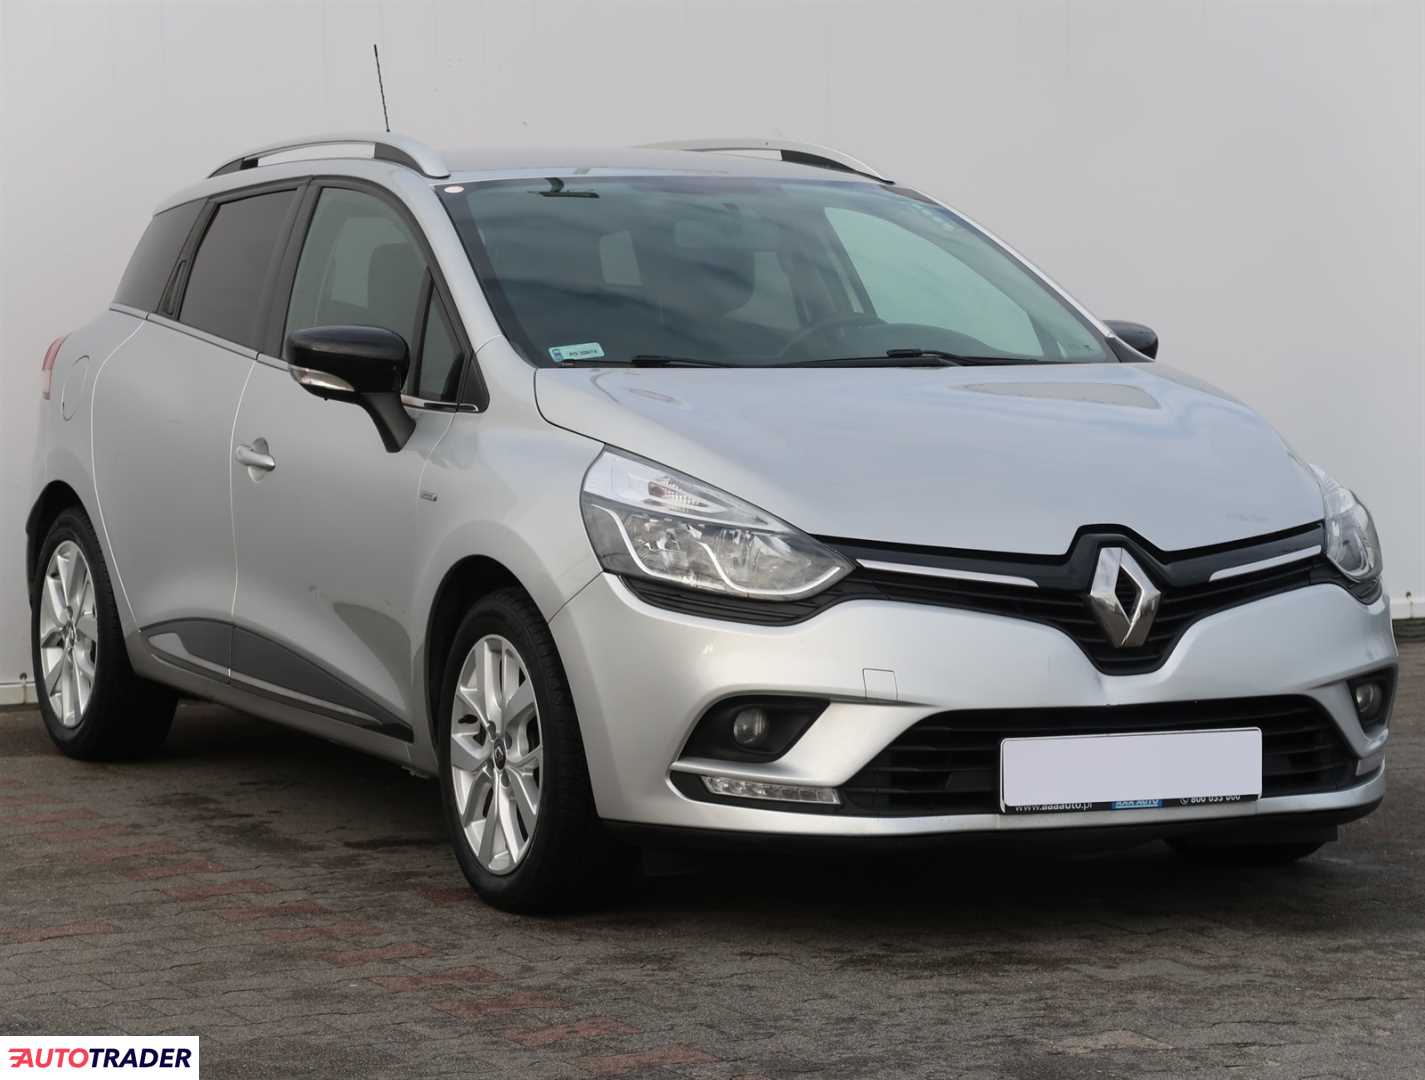 Renault Clio 2018 1.2 116 KM